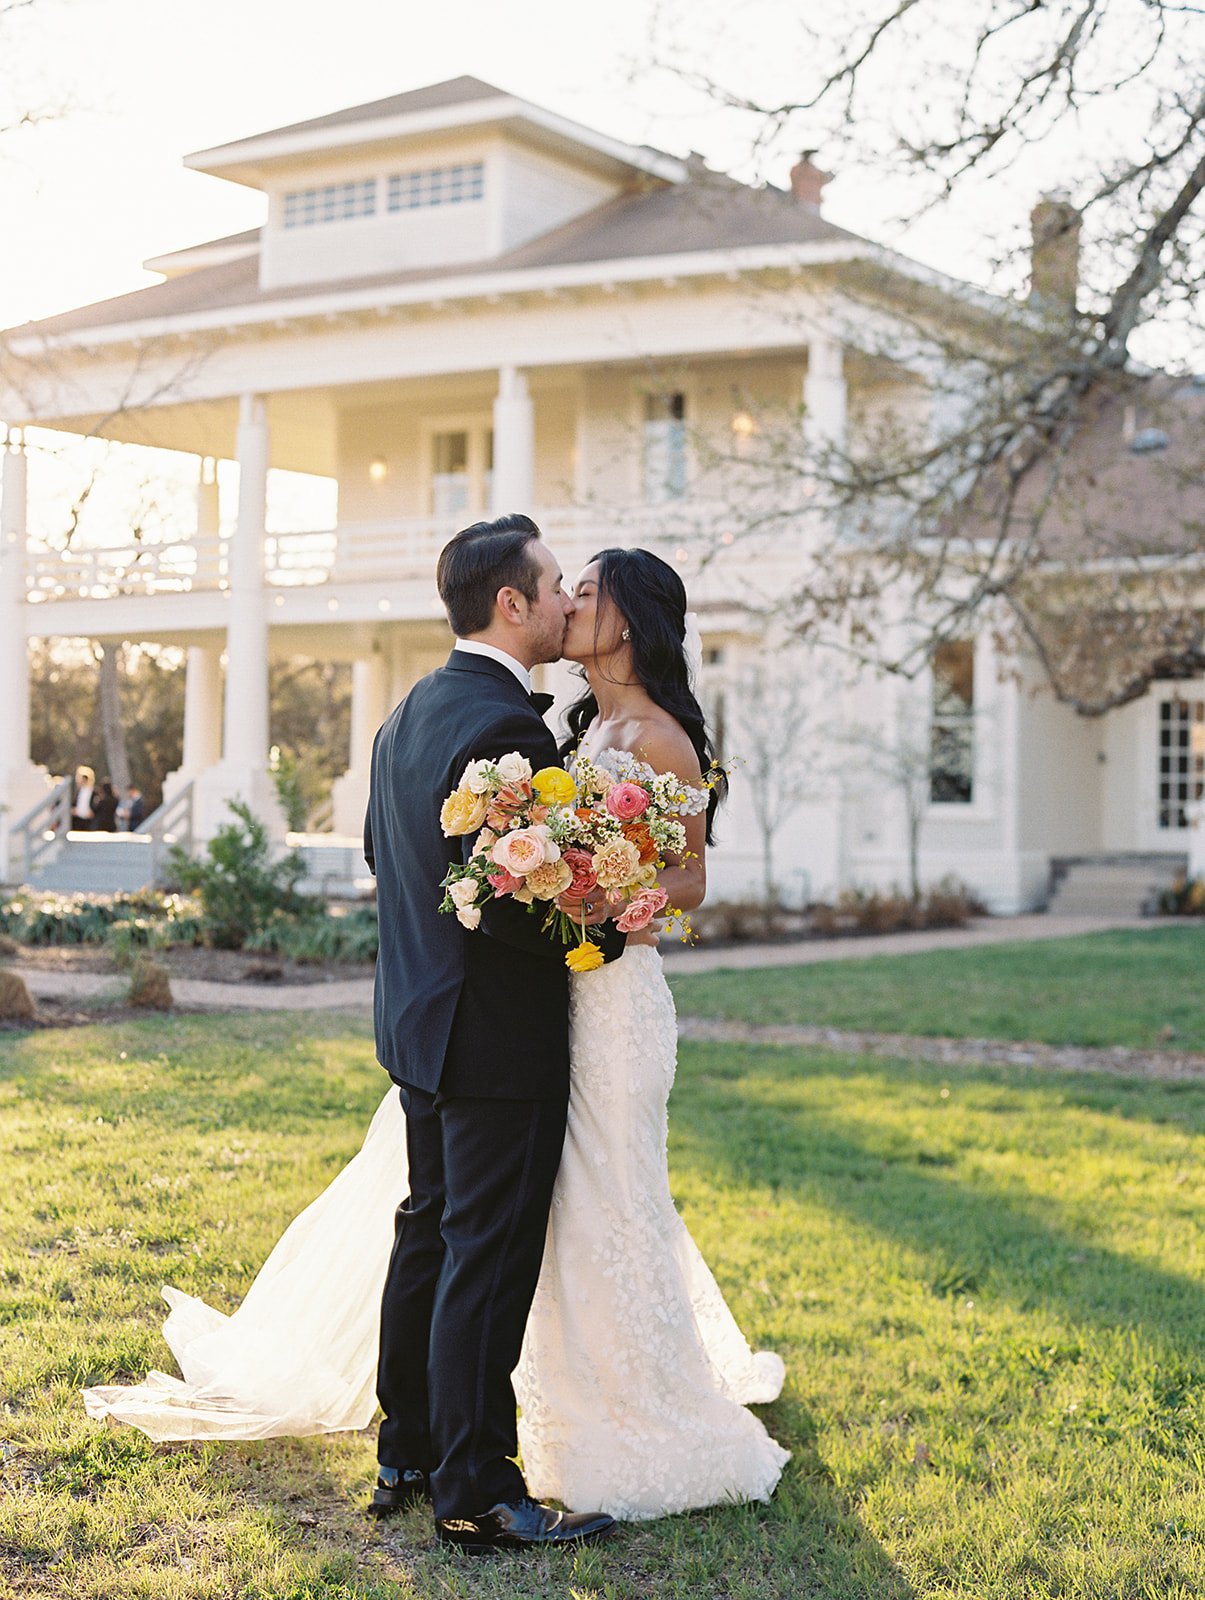 Best-Austin-Wedding-Photographers-Elopement-Film-35mm-Asheville-Santa-Barbara-Grand-Lady-173.jpg